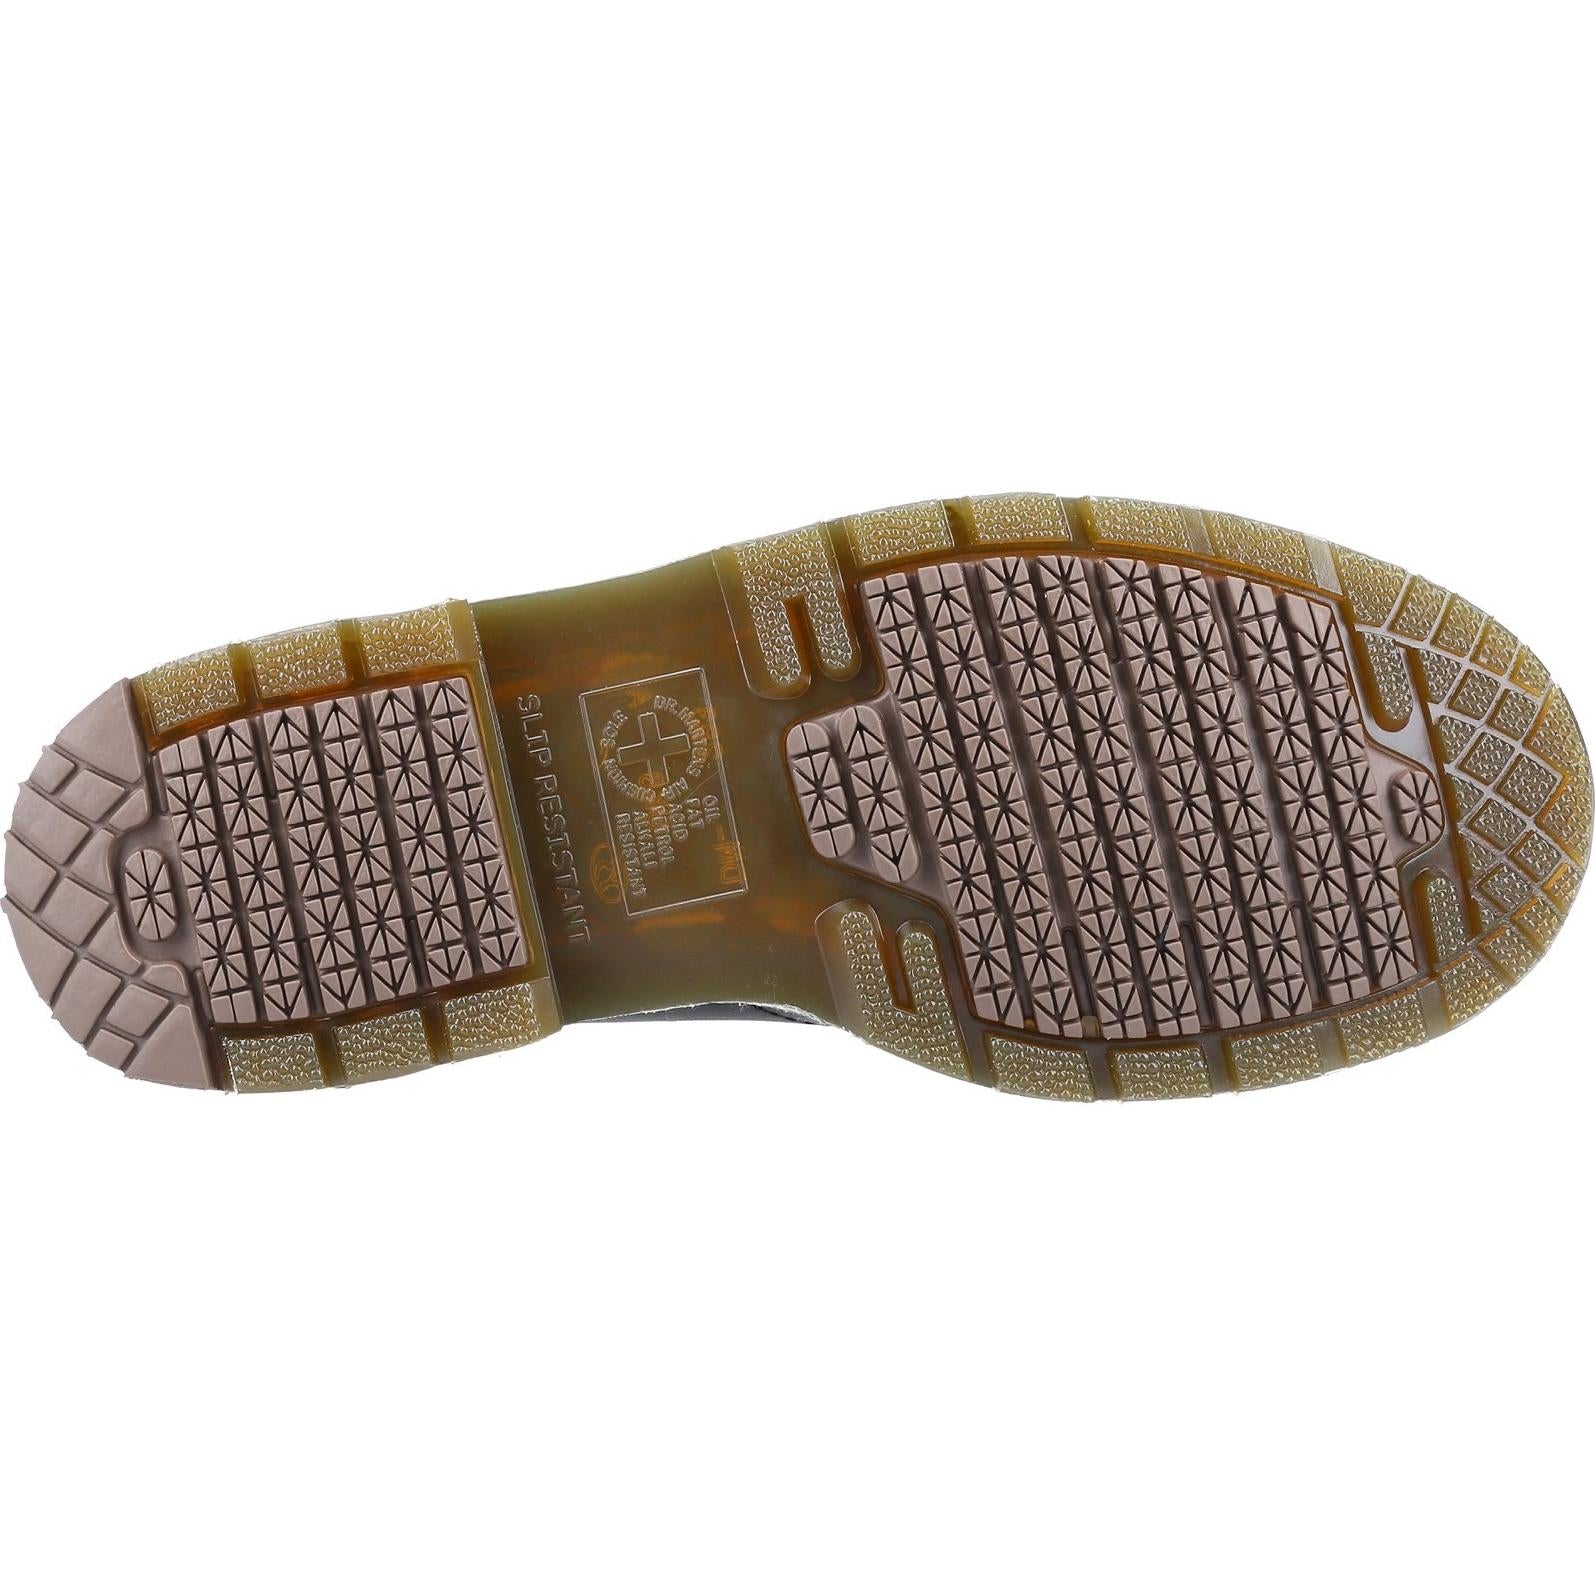 Dr. Martens 1461 Slip Resistant Leather Shoes